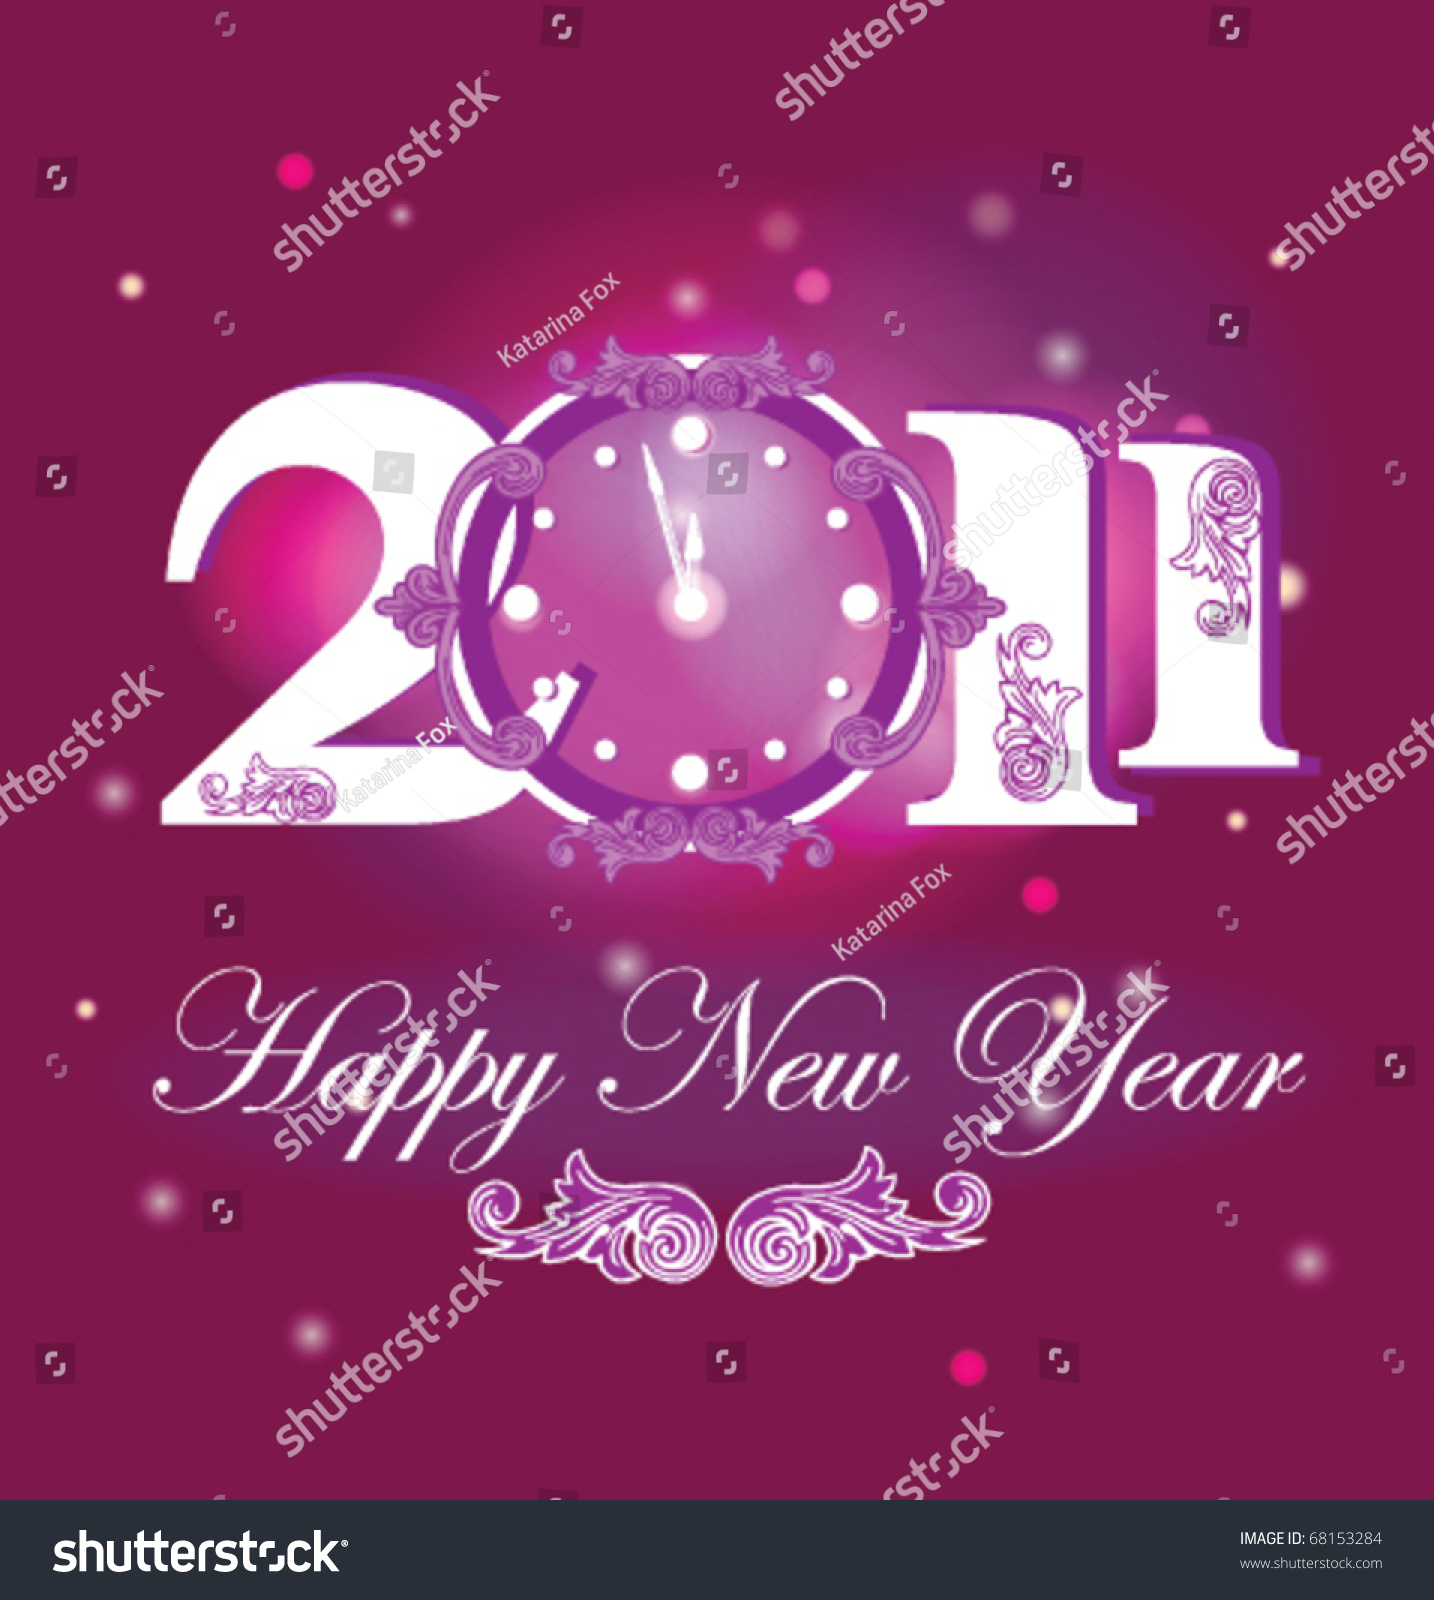 Stock Vector New Year Card - 68153284 : Shutterstock